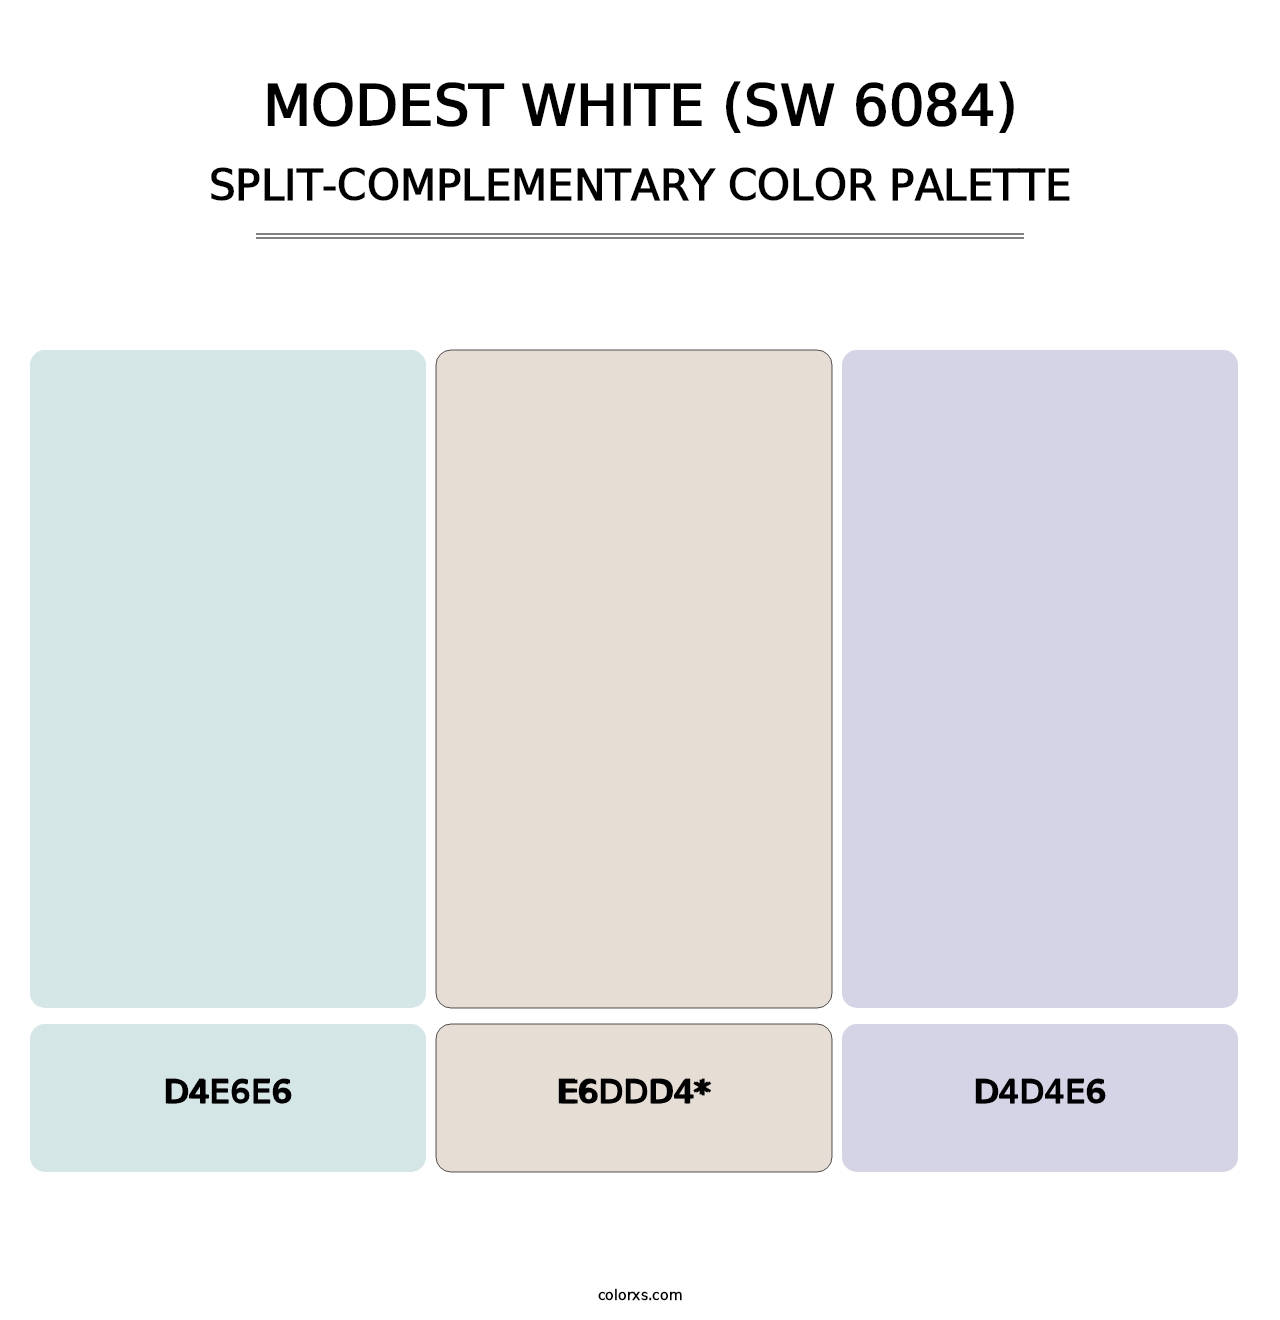 Modest White (SW 6084) - Split-Complementary Color Palette